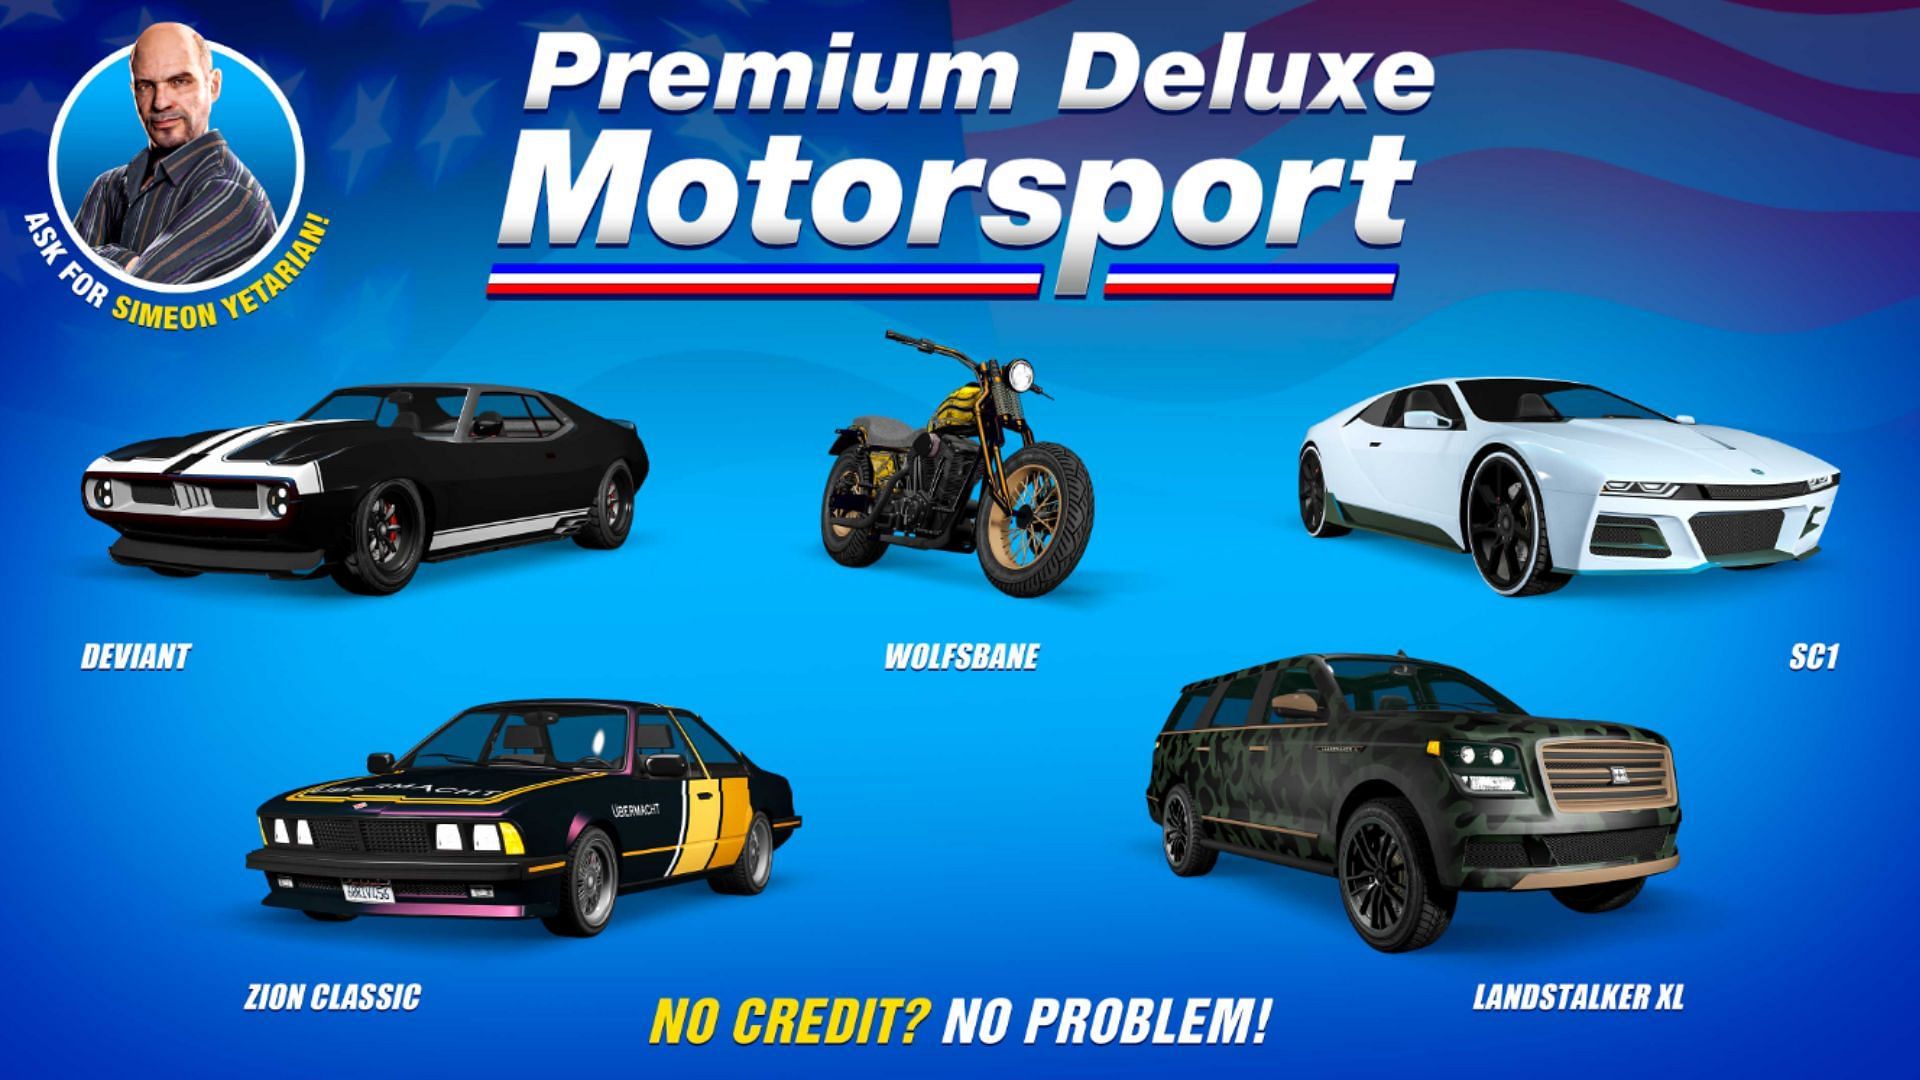 The Schyster Deviant in the Premium Deluxe Motorsport list (Image via Rockstar Games)